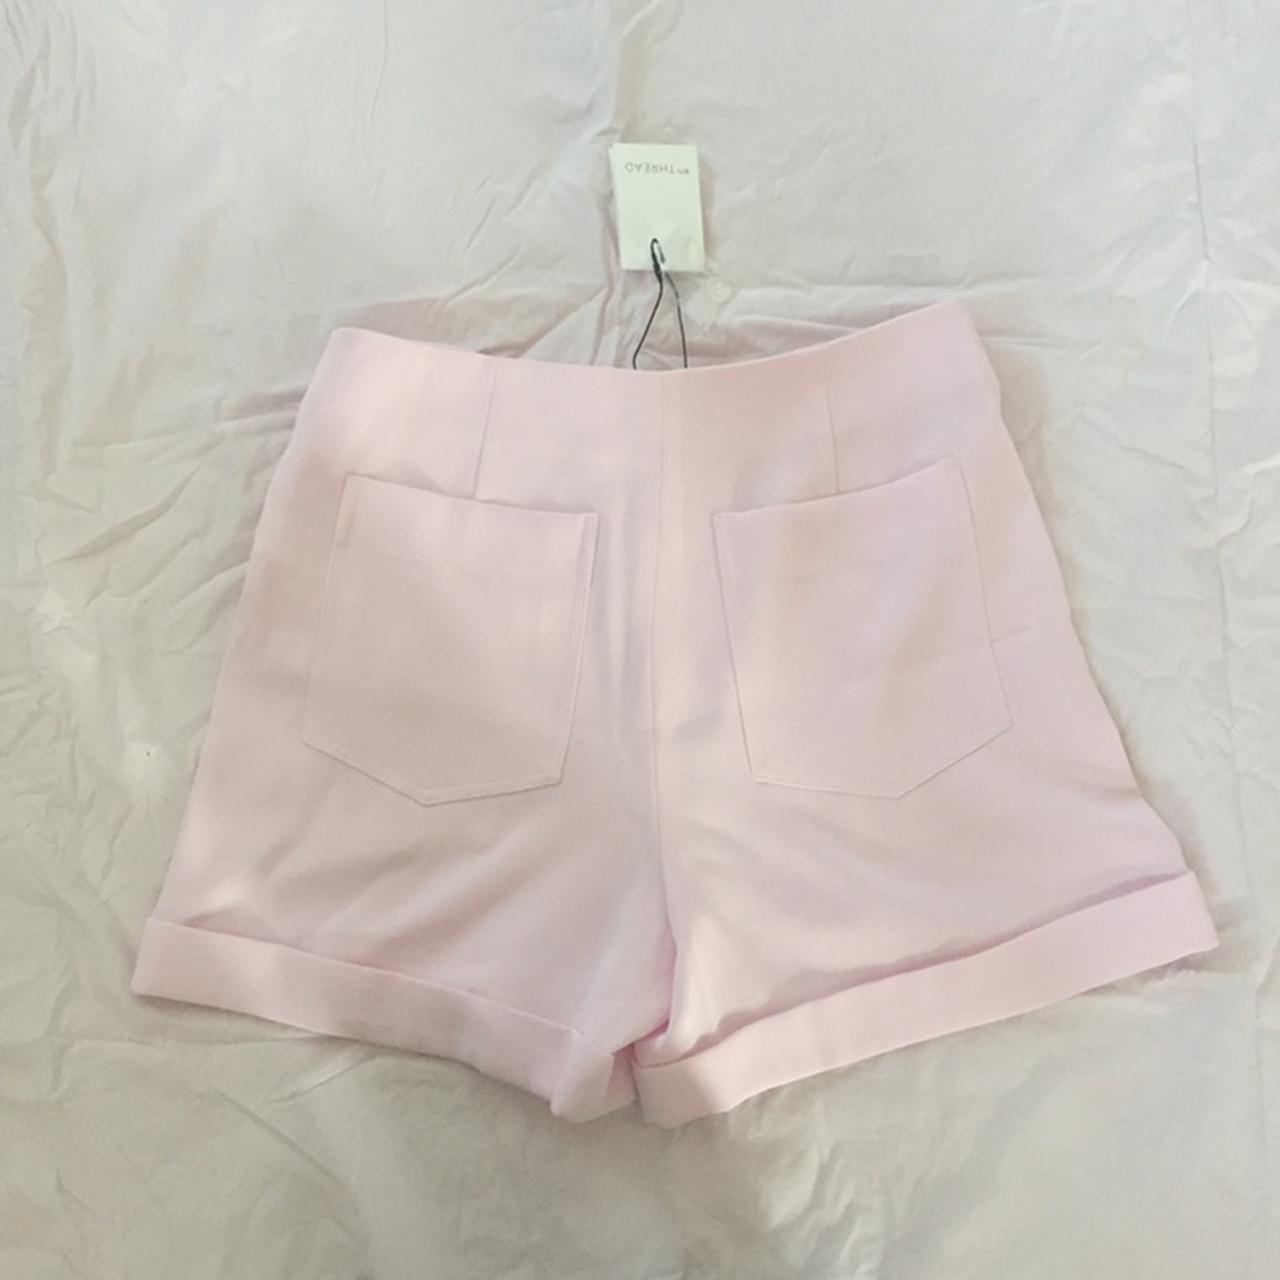 Loose Threads Women's Pink Shorts (3)